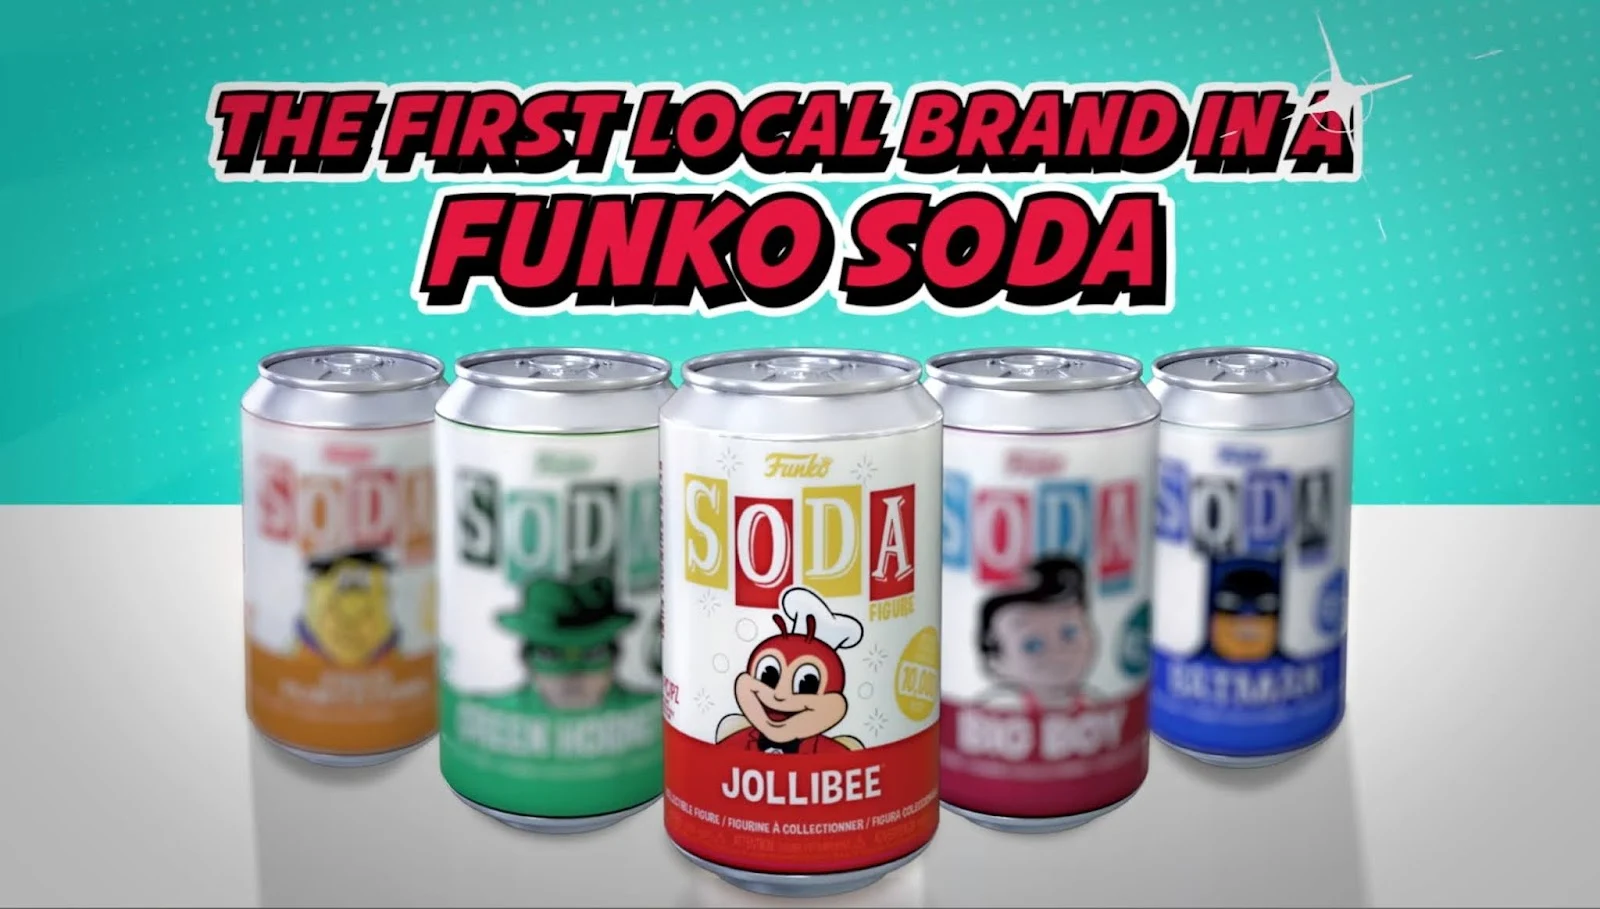 Jollibee Funko Soda release